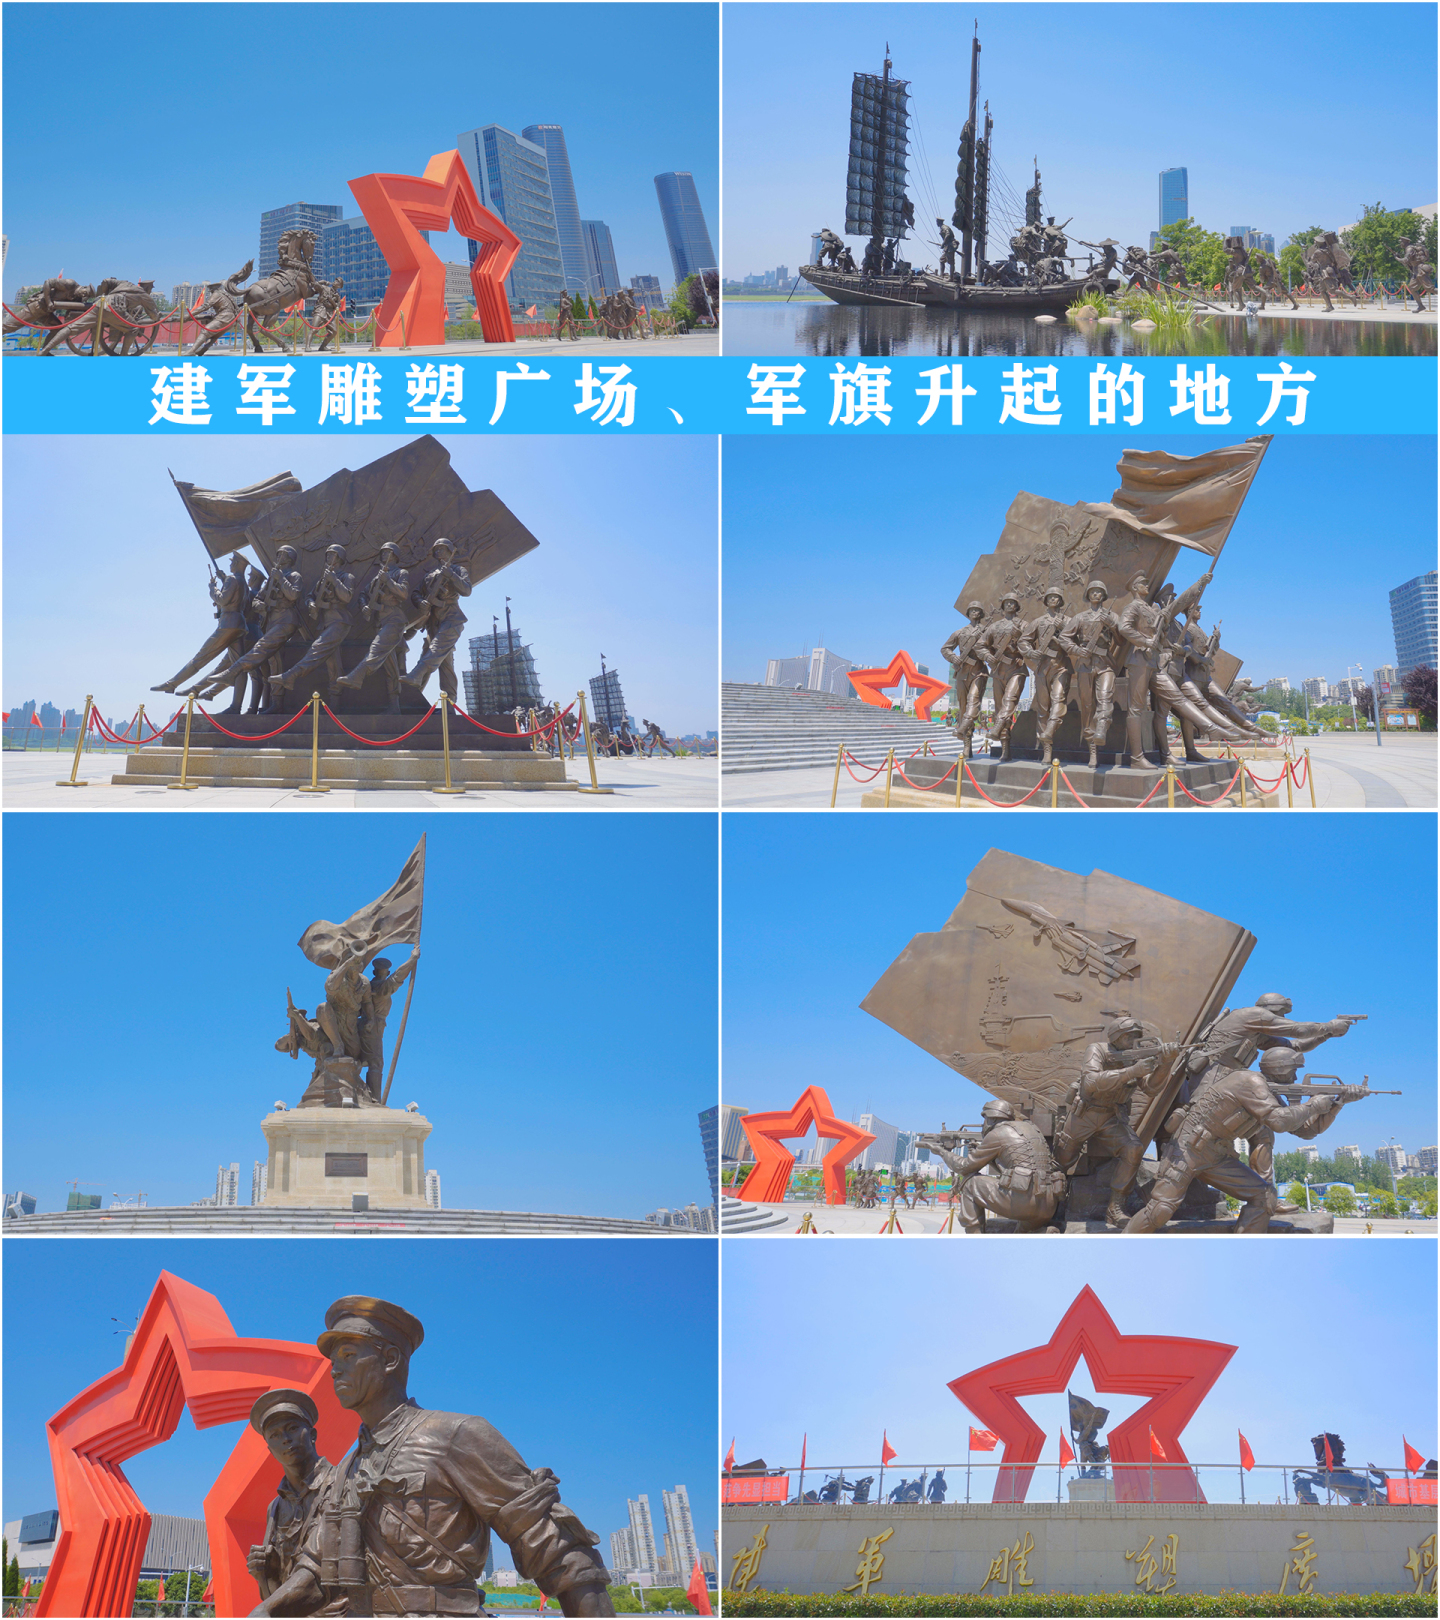 【4K】建军雕塑广场、军旗升起的地方